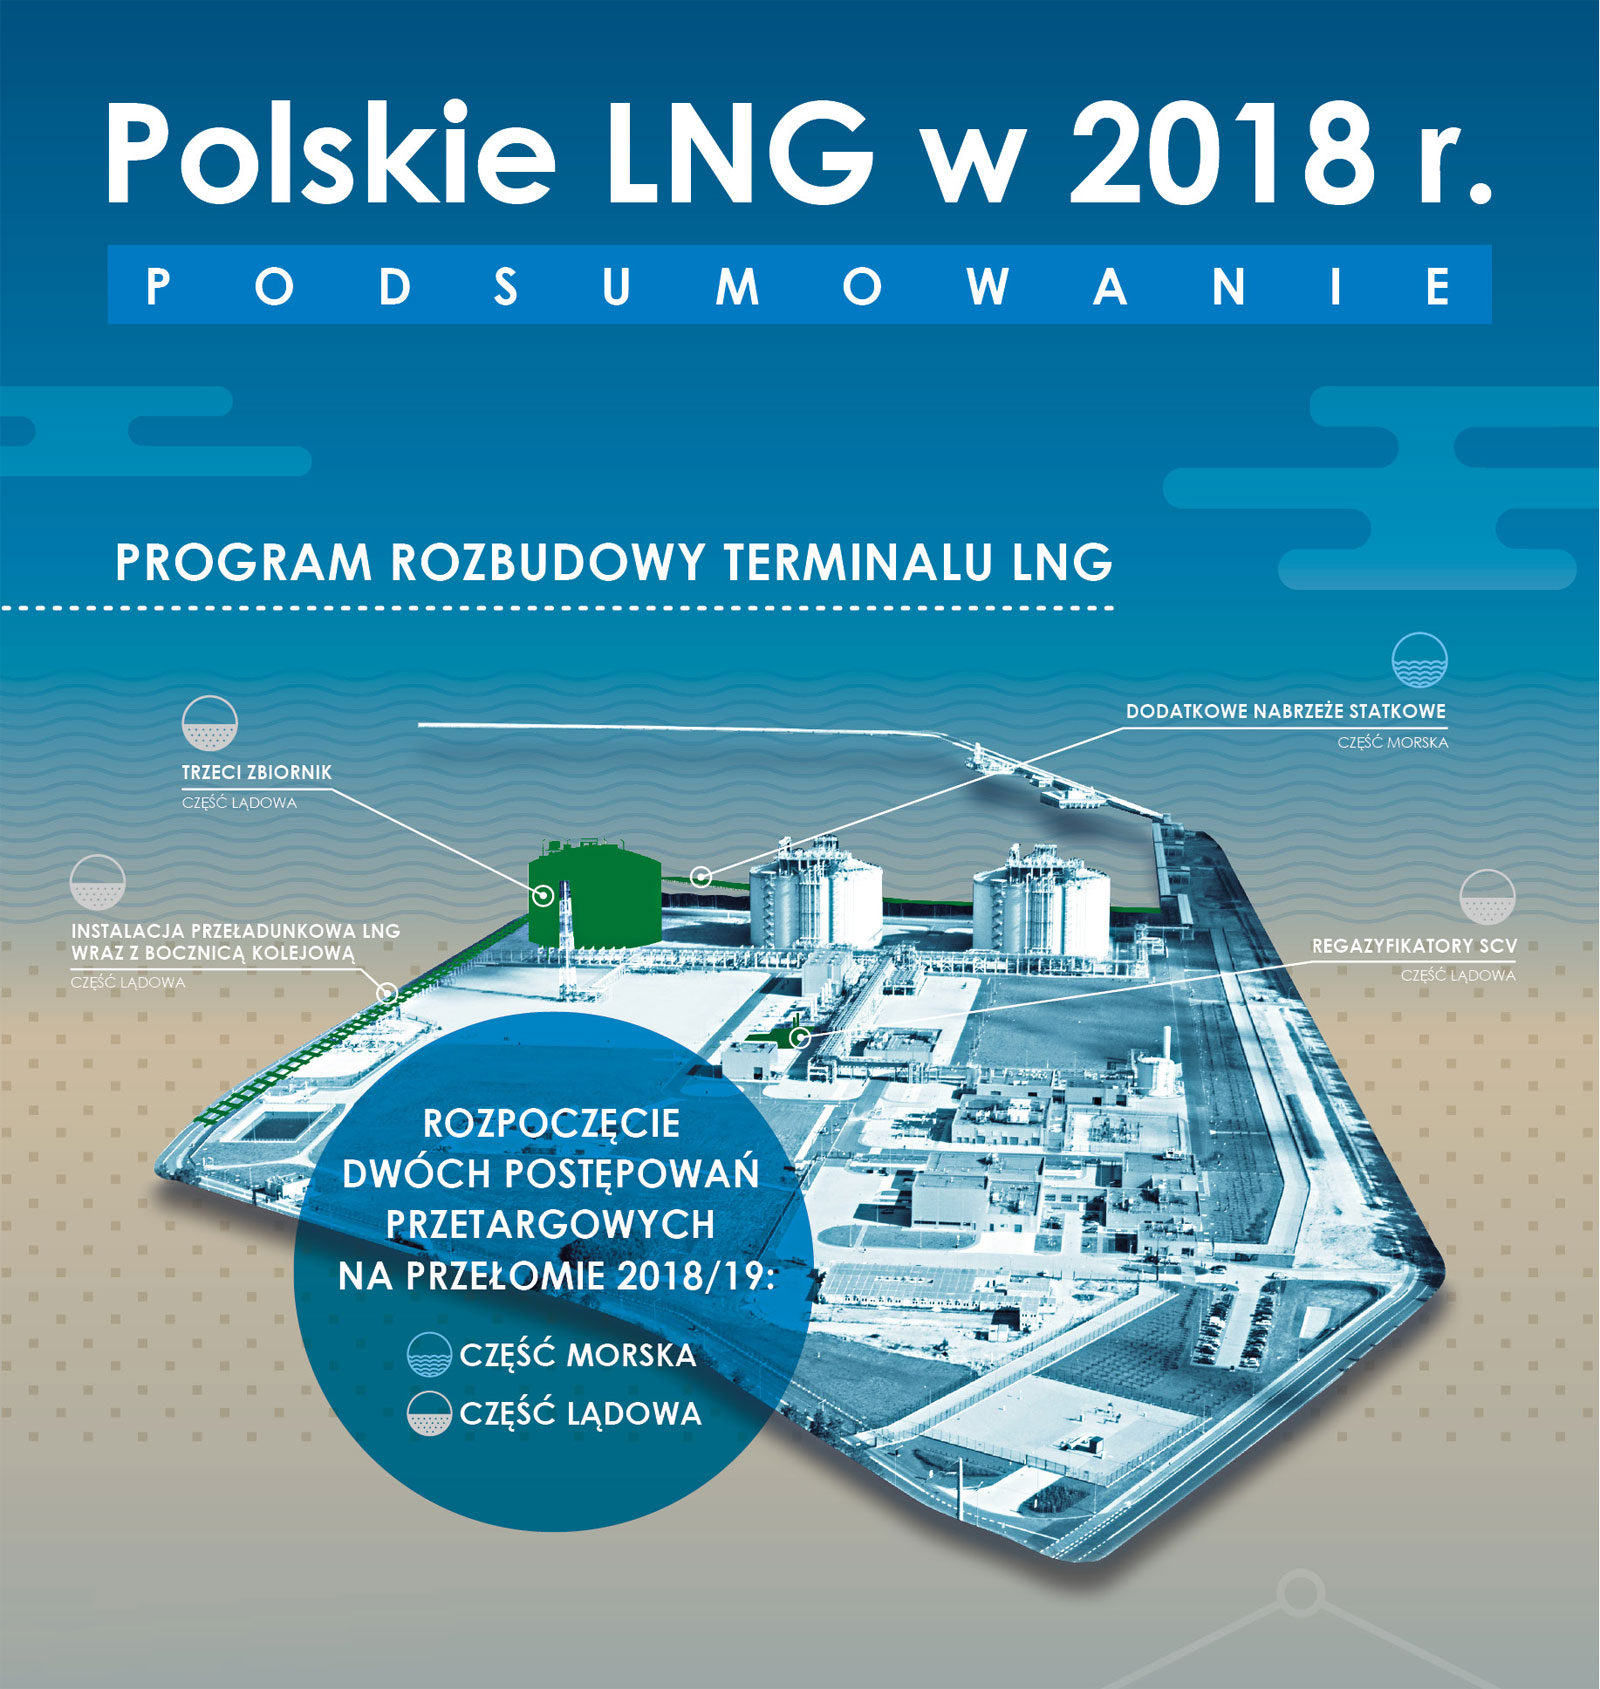 Polskie LNG podsumowuje rok 2018